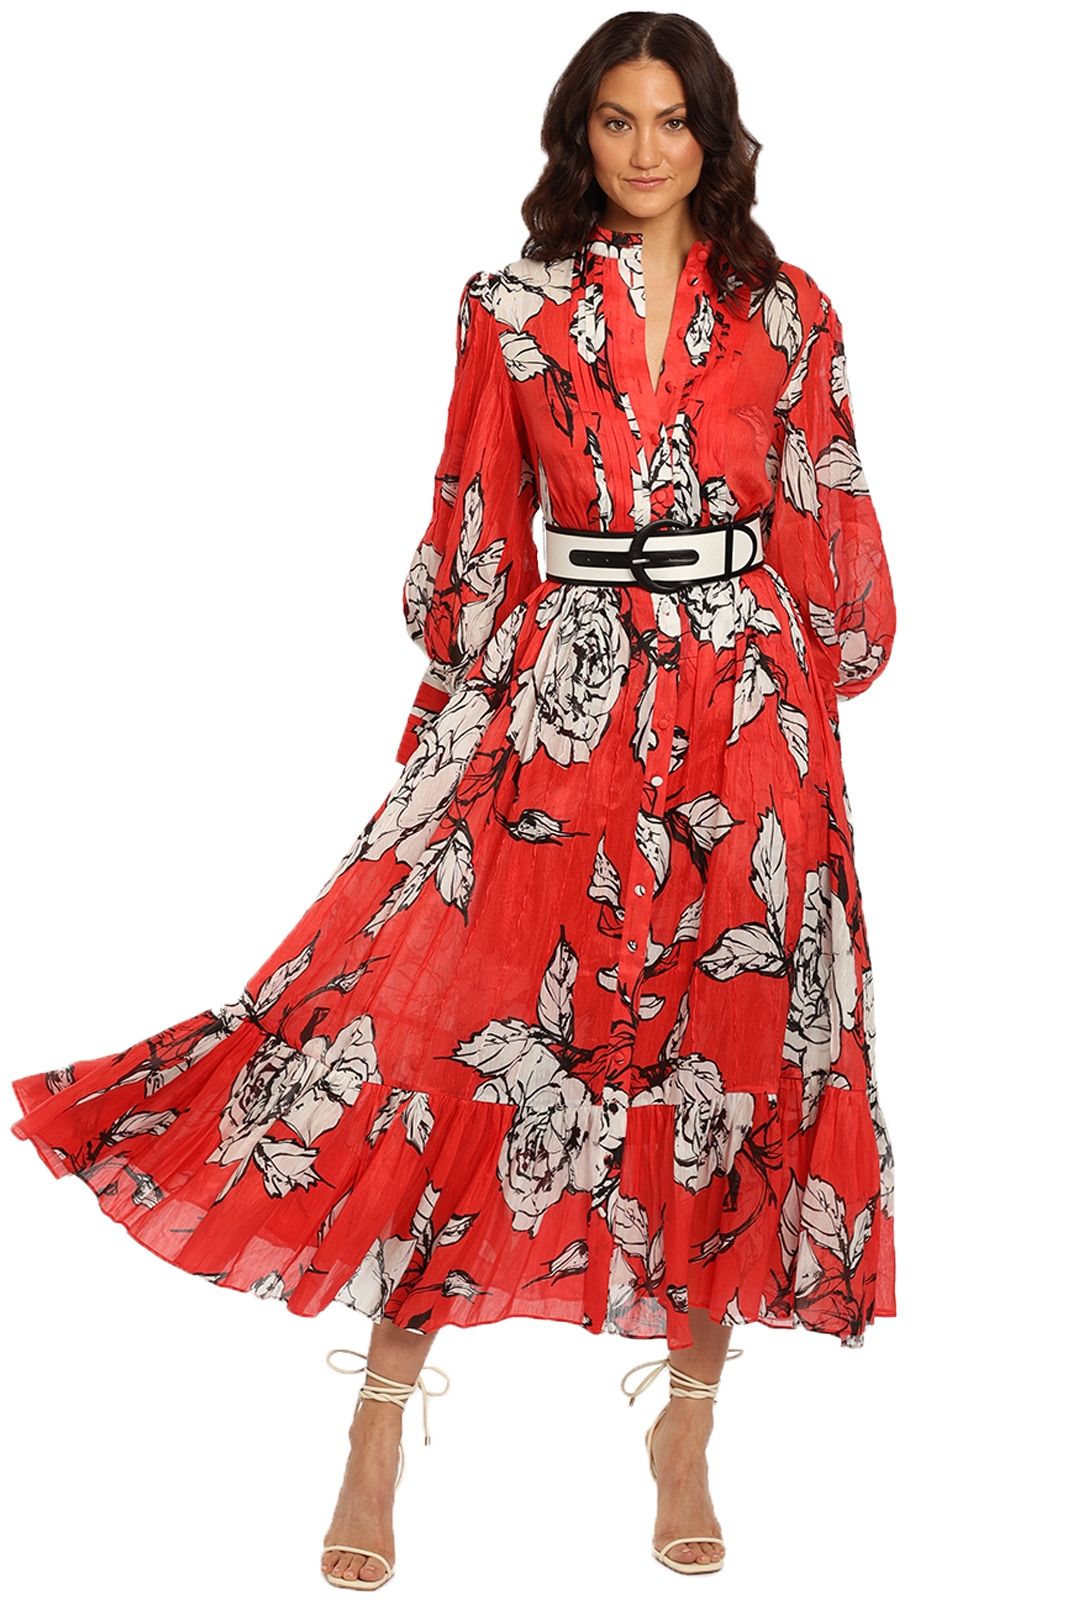 LEO LIN - Cambridge Dress - Imperial